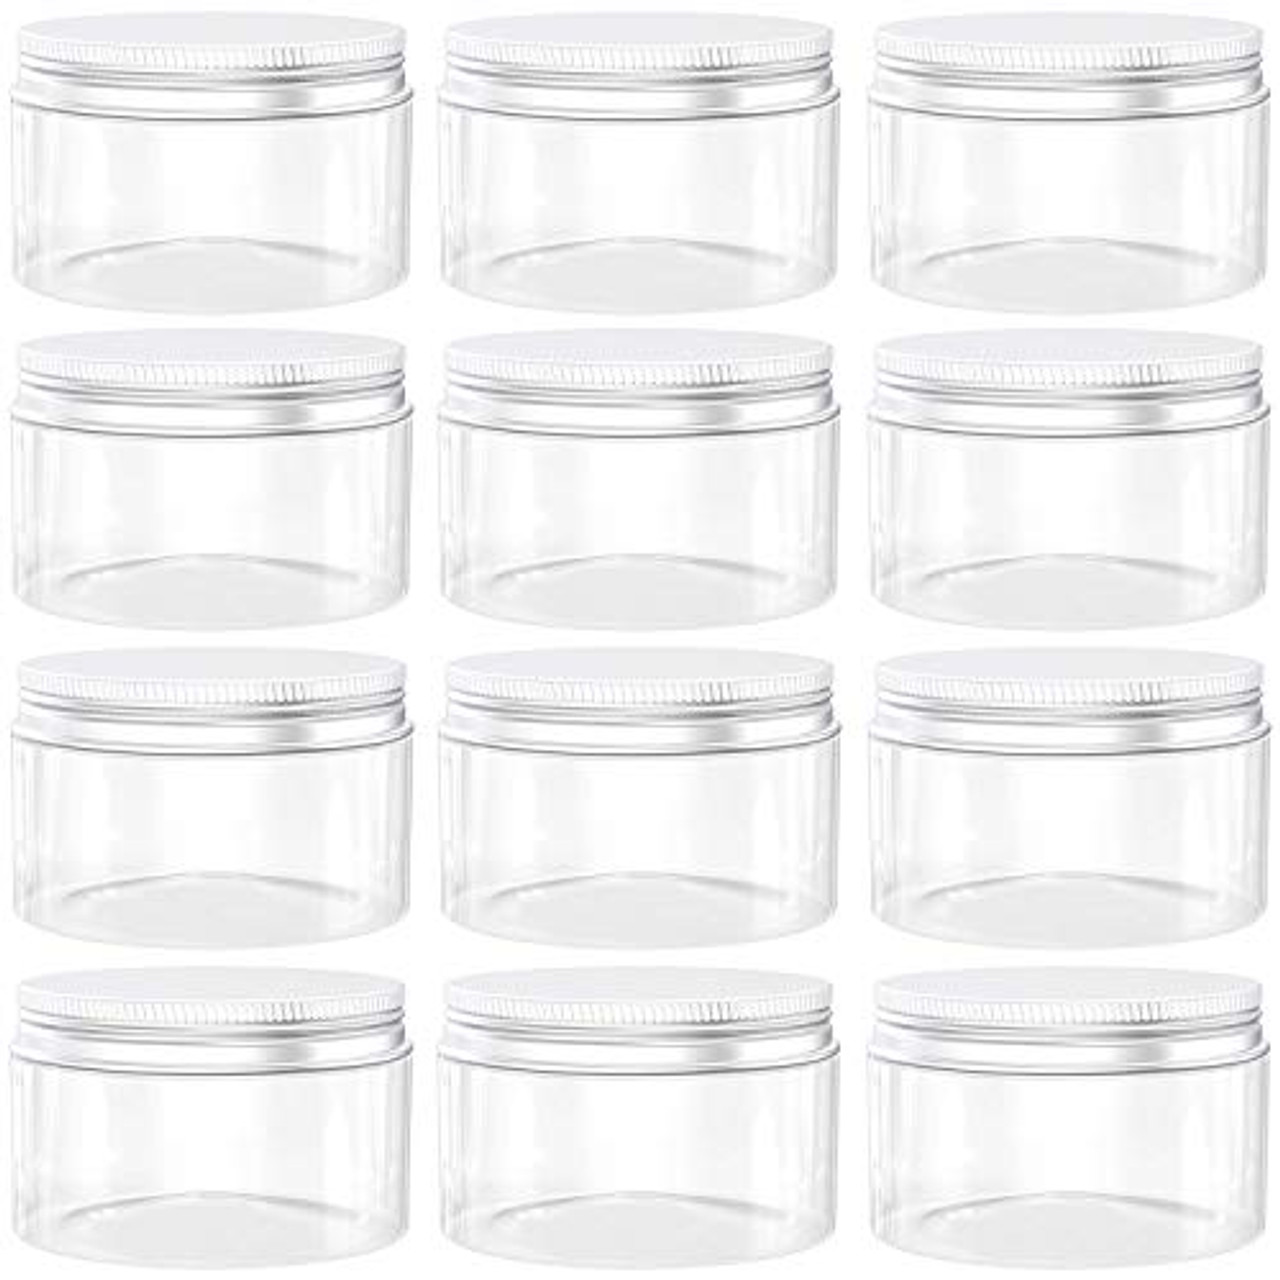  Axe Sickle 24 Ounce Clear Plastic Jars Storage